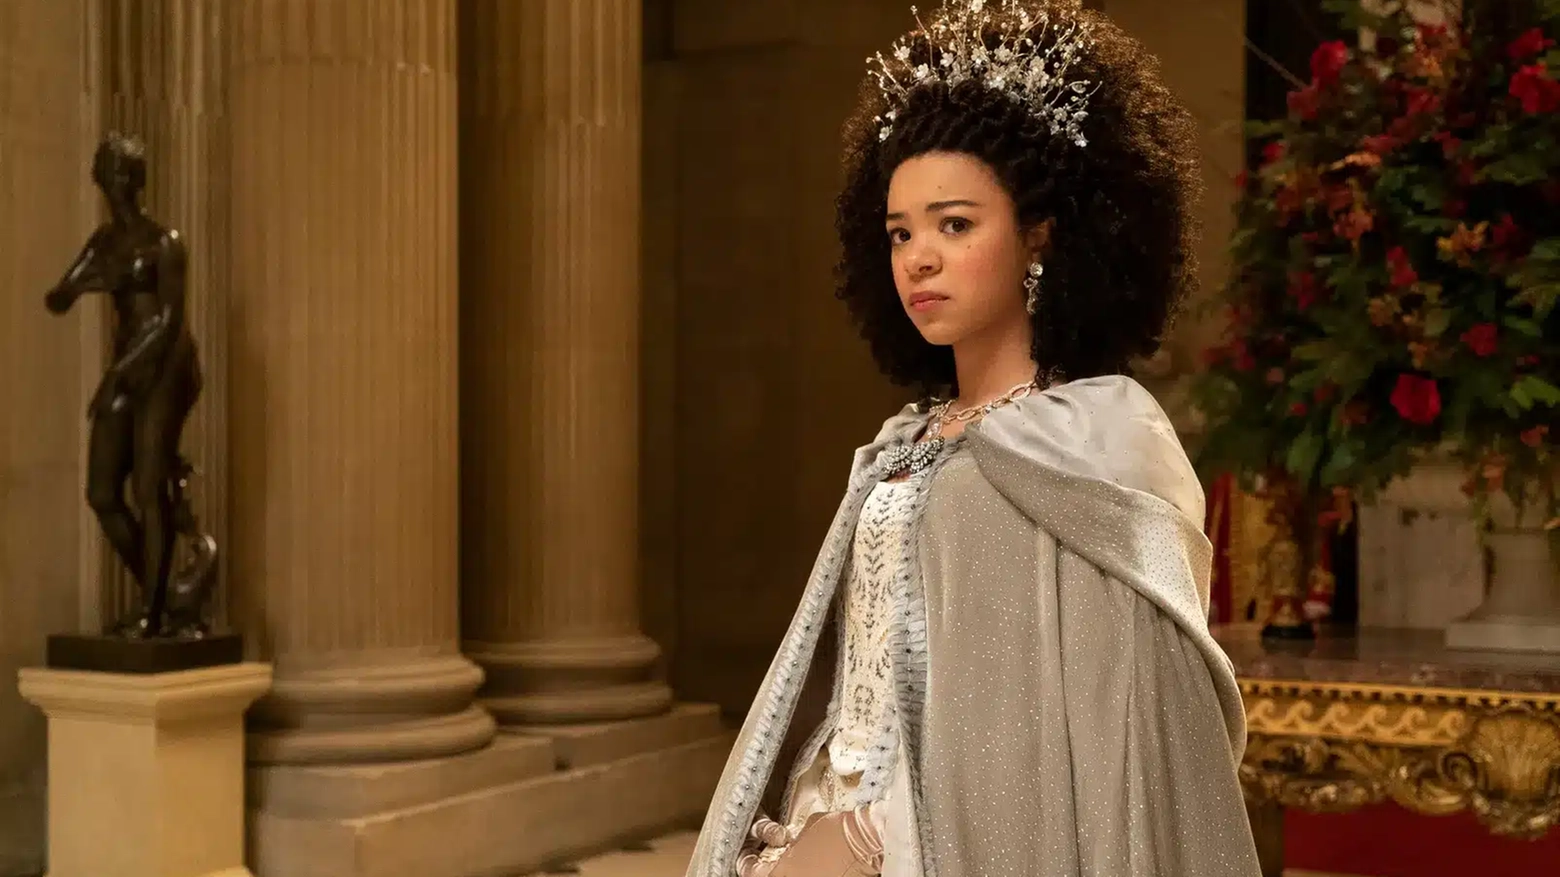 India Amarteifio protagonista della nuova serie Netflix “La regina Carlotta: Una storia Bridgerton”